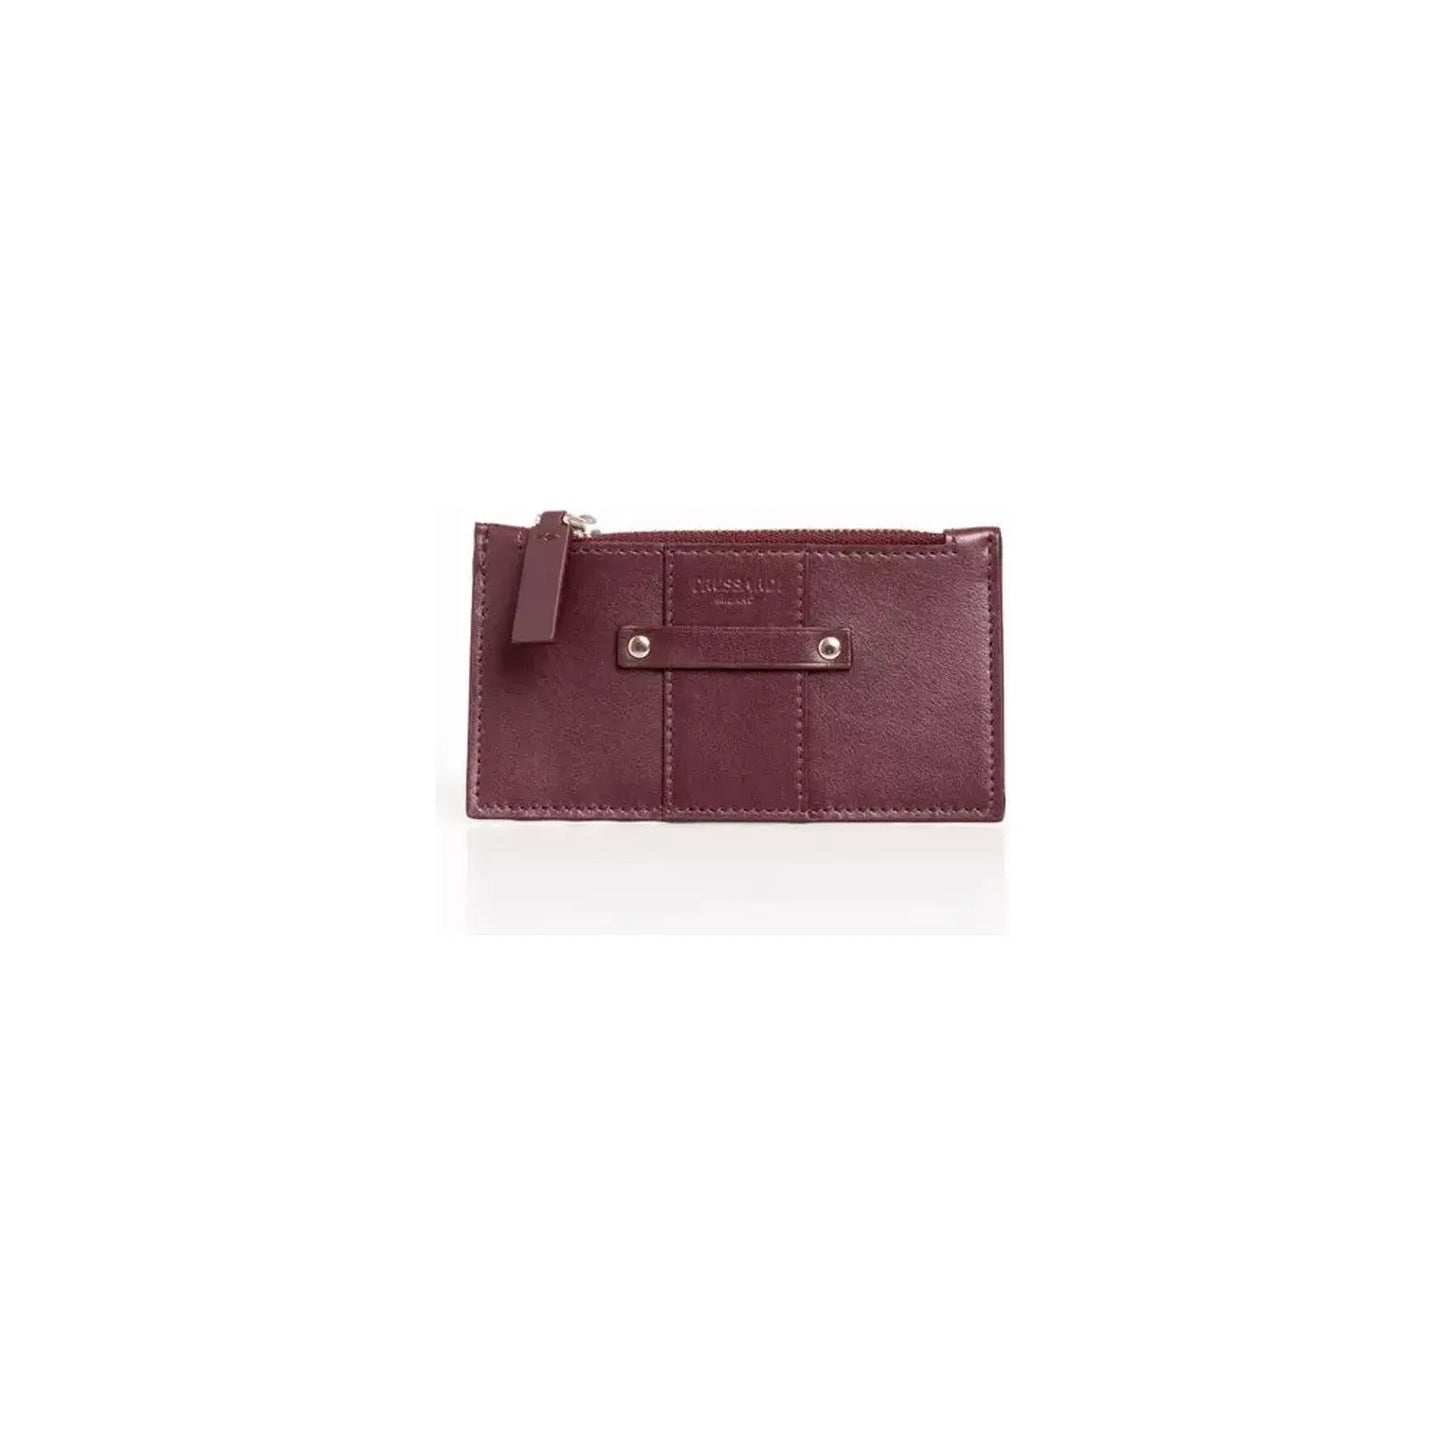 Trussardi Elegant Soft Leather Card Holder in Rich Brown Wallet r-wallet-6 stock_product_image_21579_1897785078-27-9669ecfc-c2c.webp